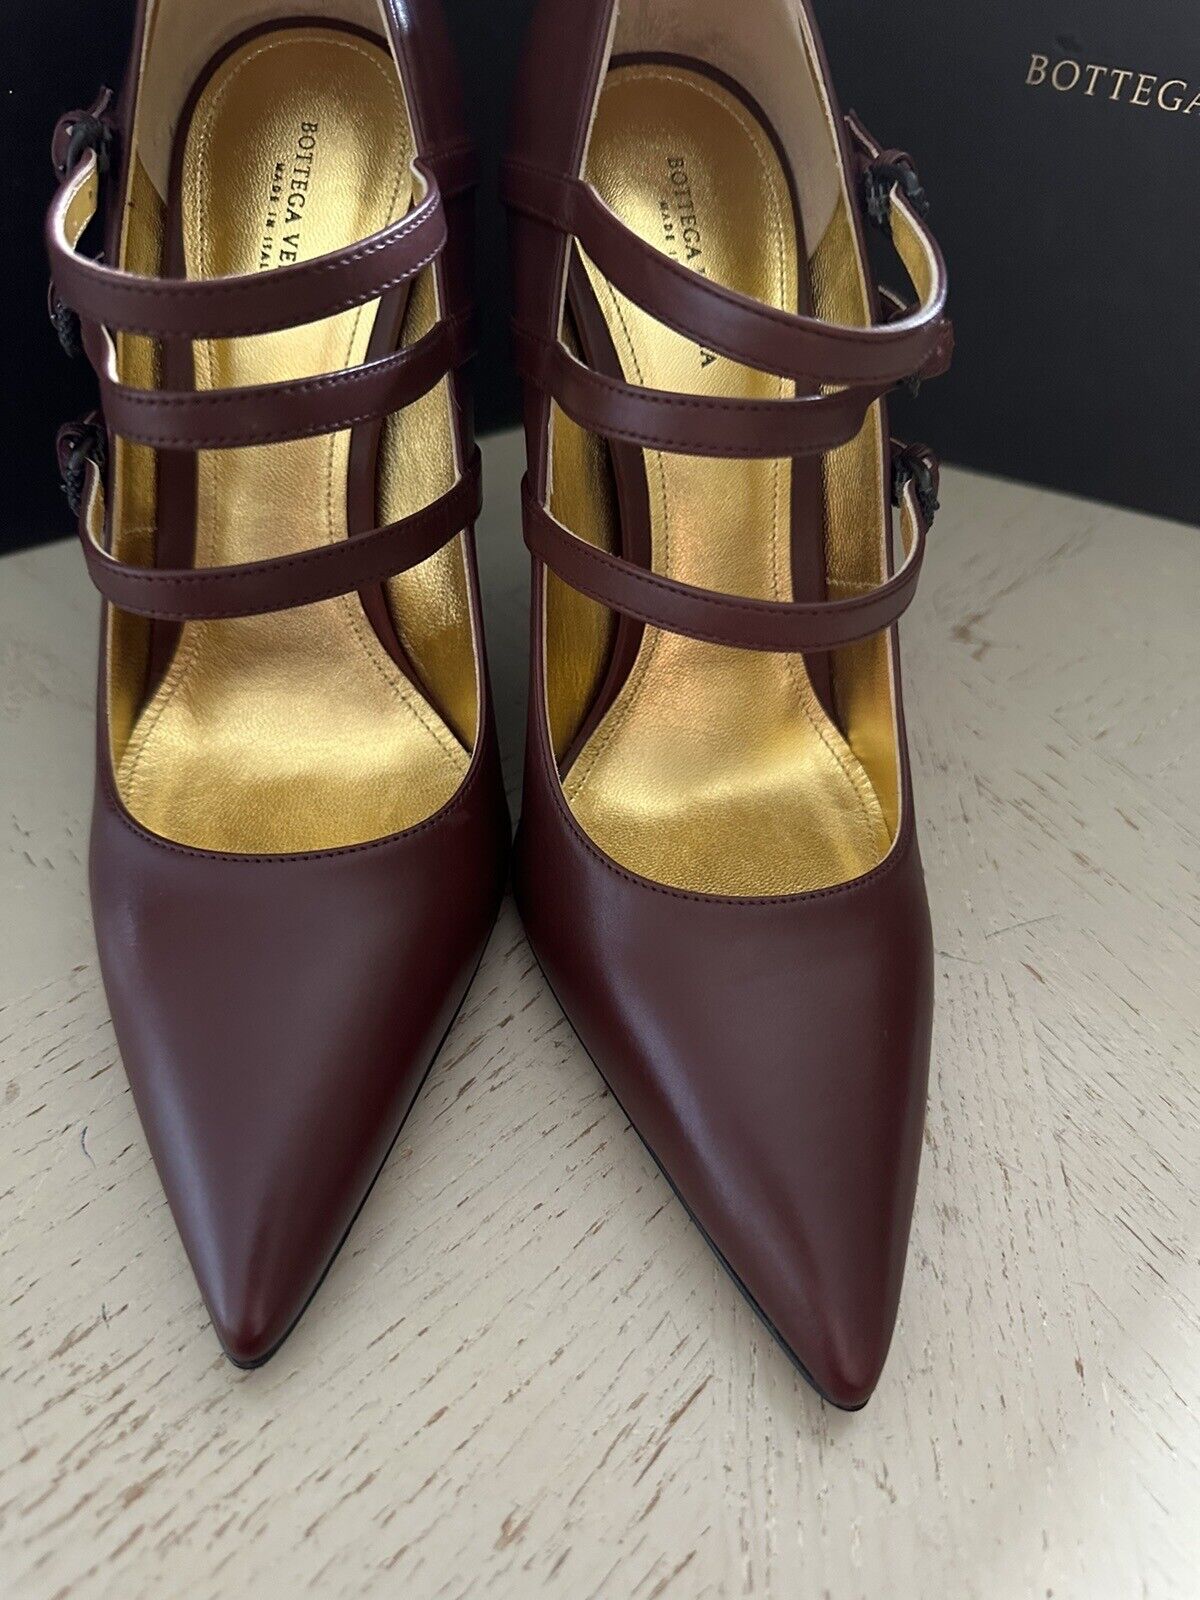 NIB $749 Bottega Veneta Women’s Leather Shoes Burgundy 8.5 US/38.5 Eu